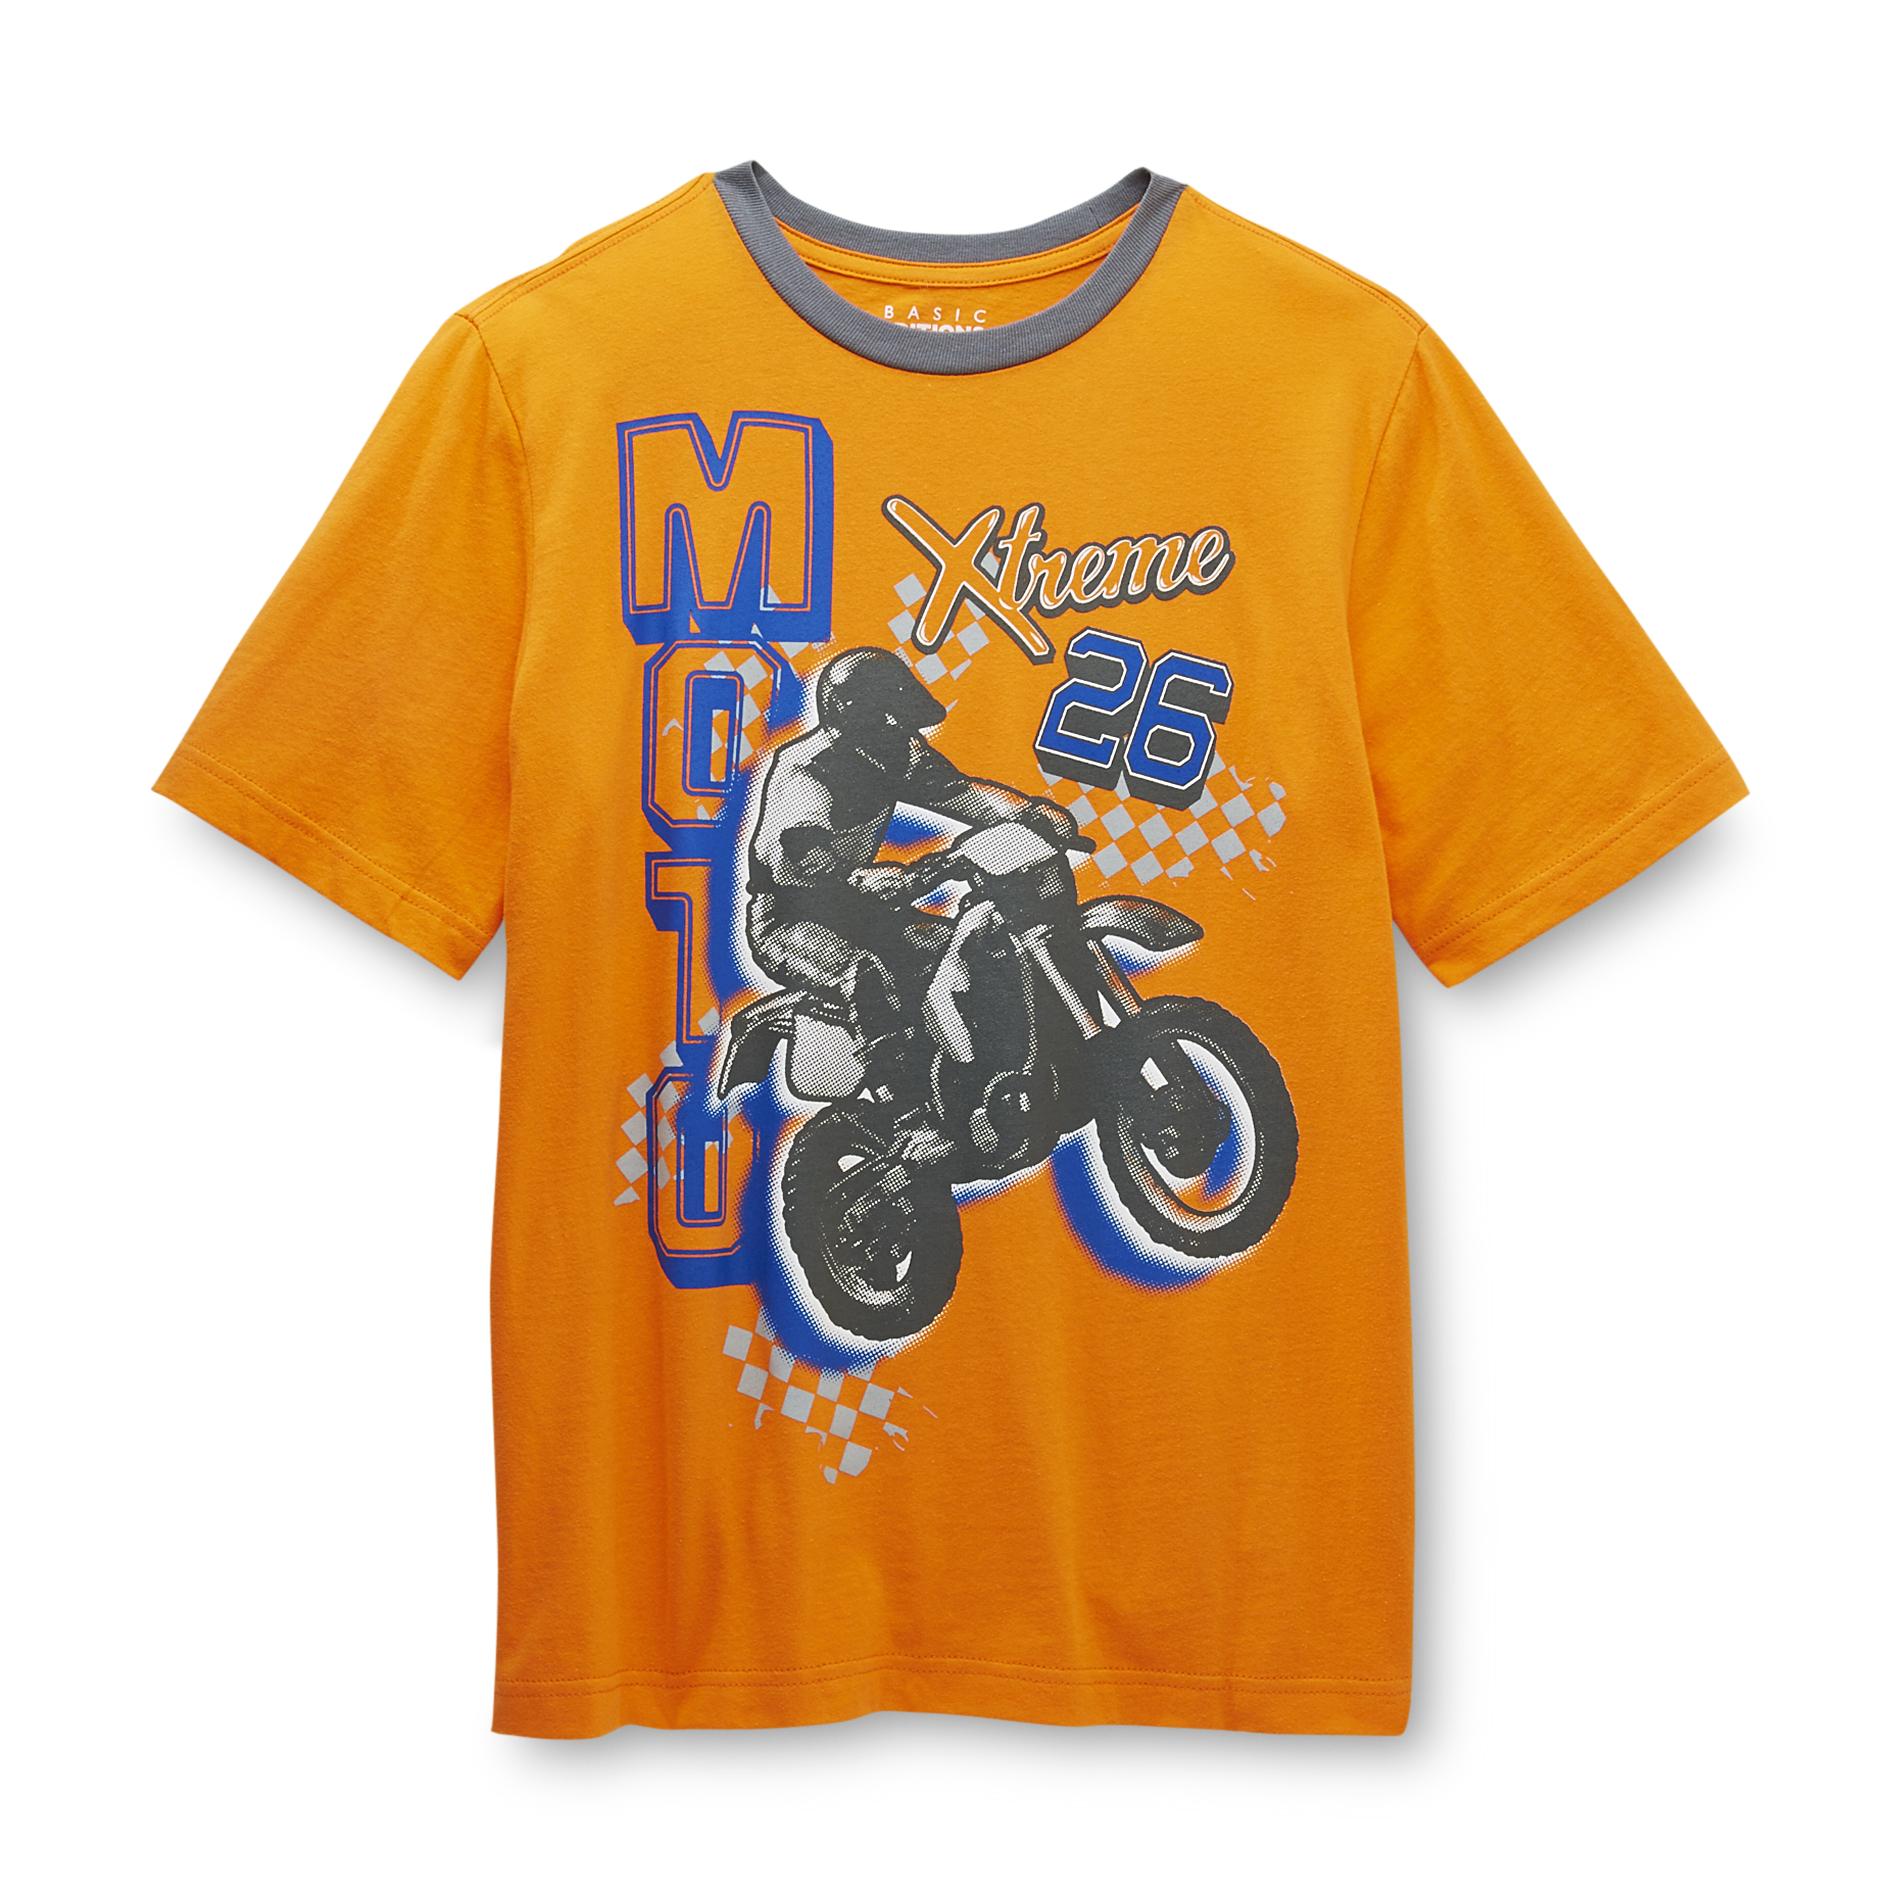 Basic Editions Boy's Short-Sleeve Graphic T-Shirt - Motocross